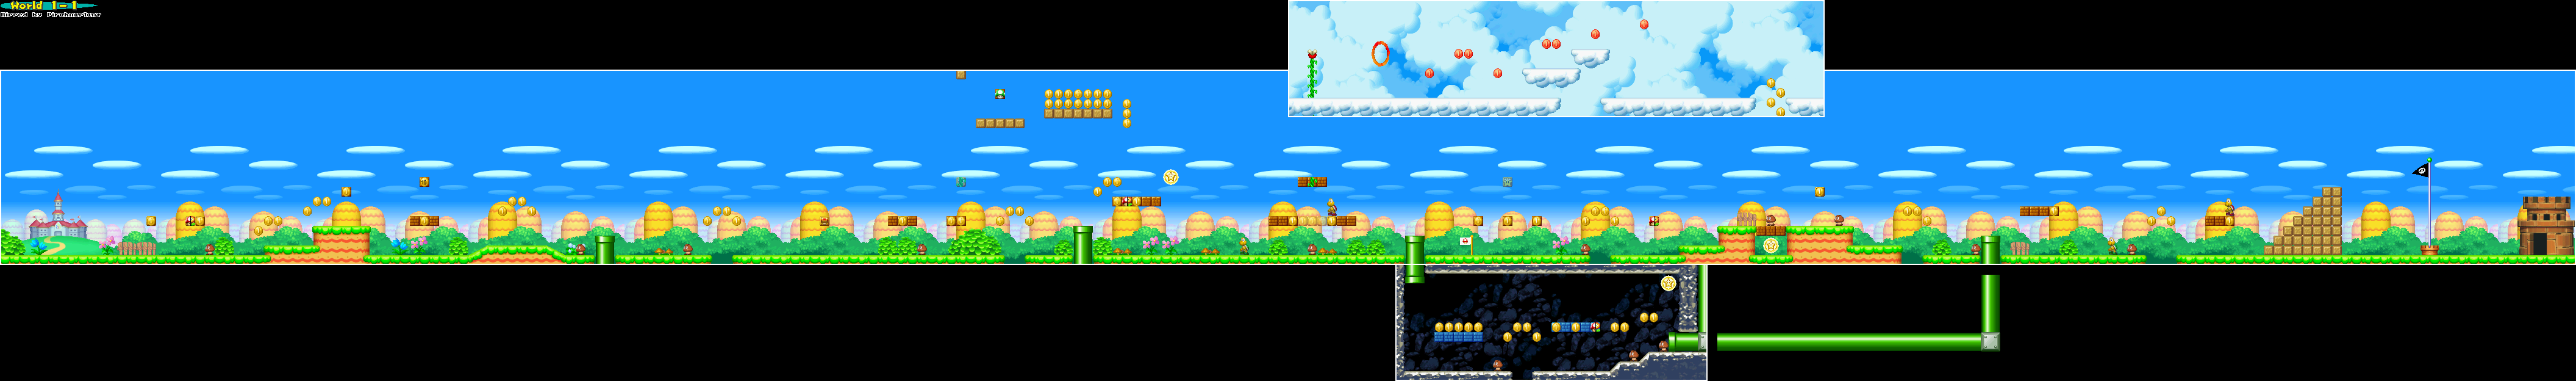 Super Mario Bros Wii World 1 Level 2